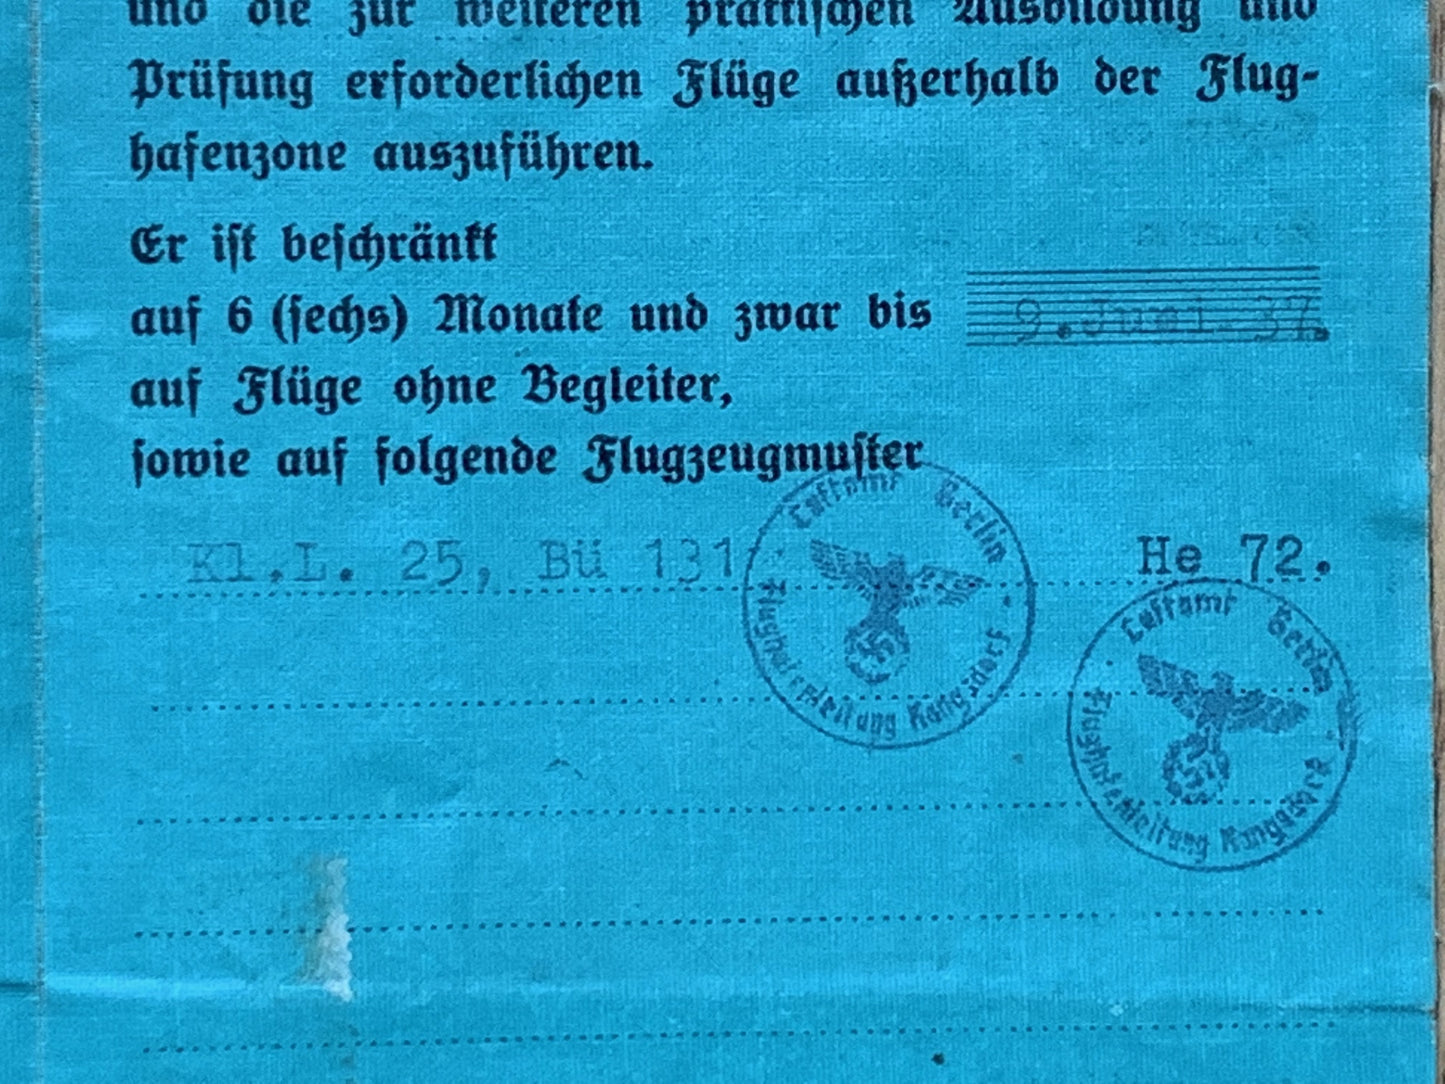 WW2 Civilian German pilots license - Berlin resident